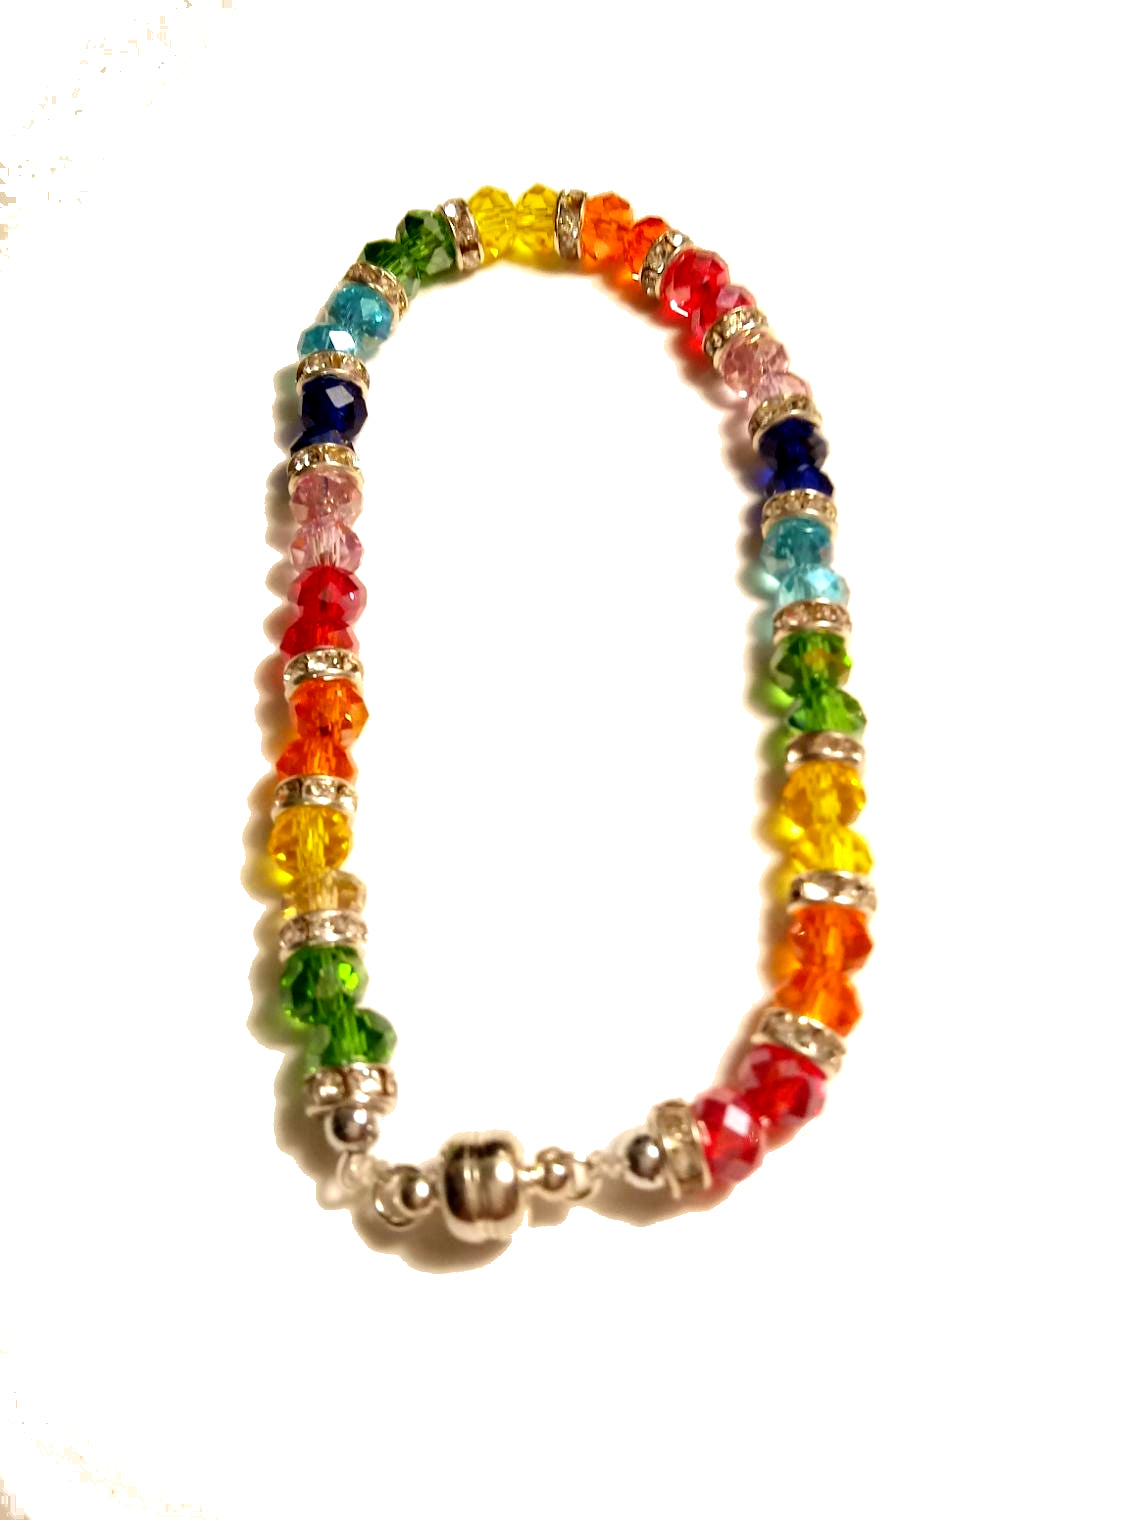 LBGTQAI Rainbow Pride Crystal Bracelet